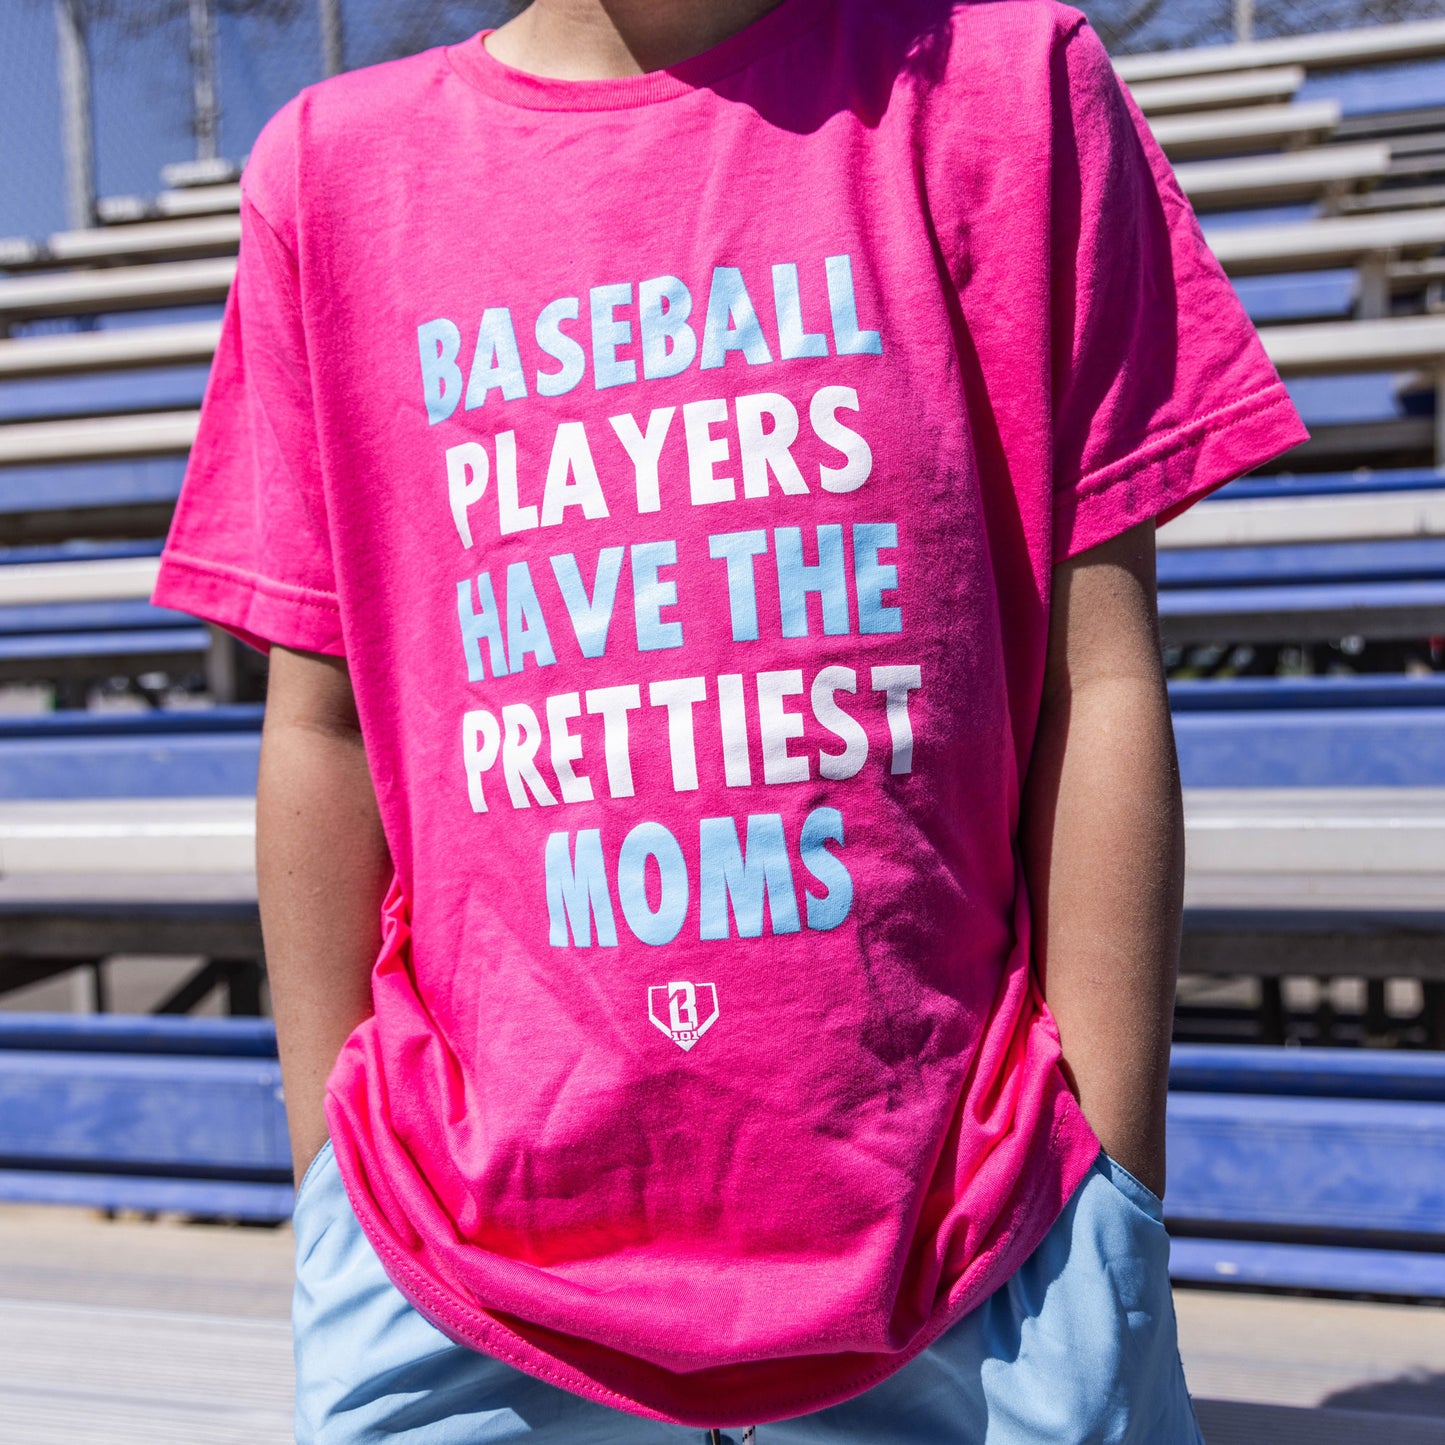 baseball moms tshirt, baseball players have the prettiest moms